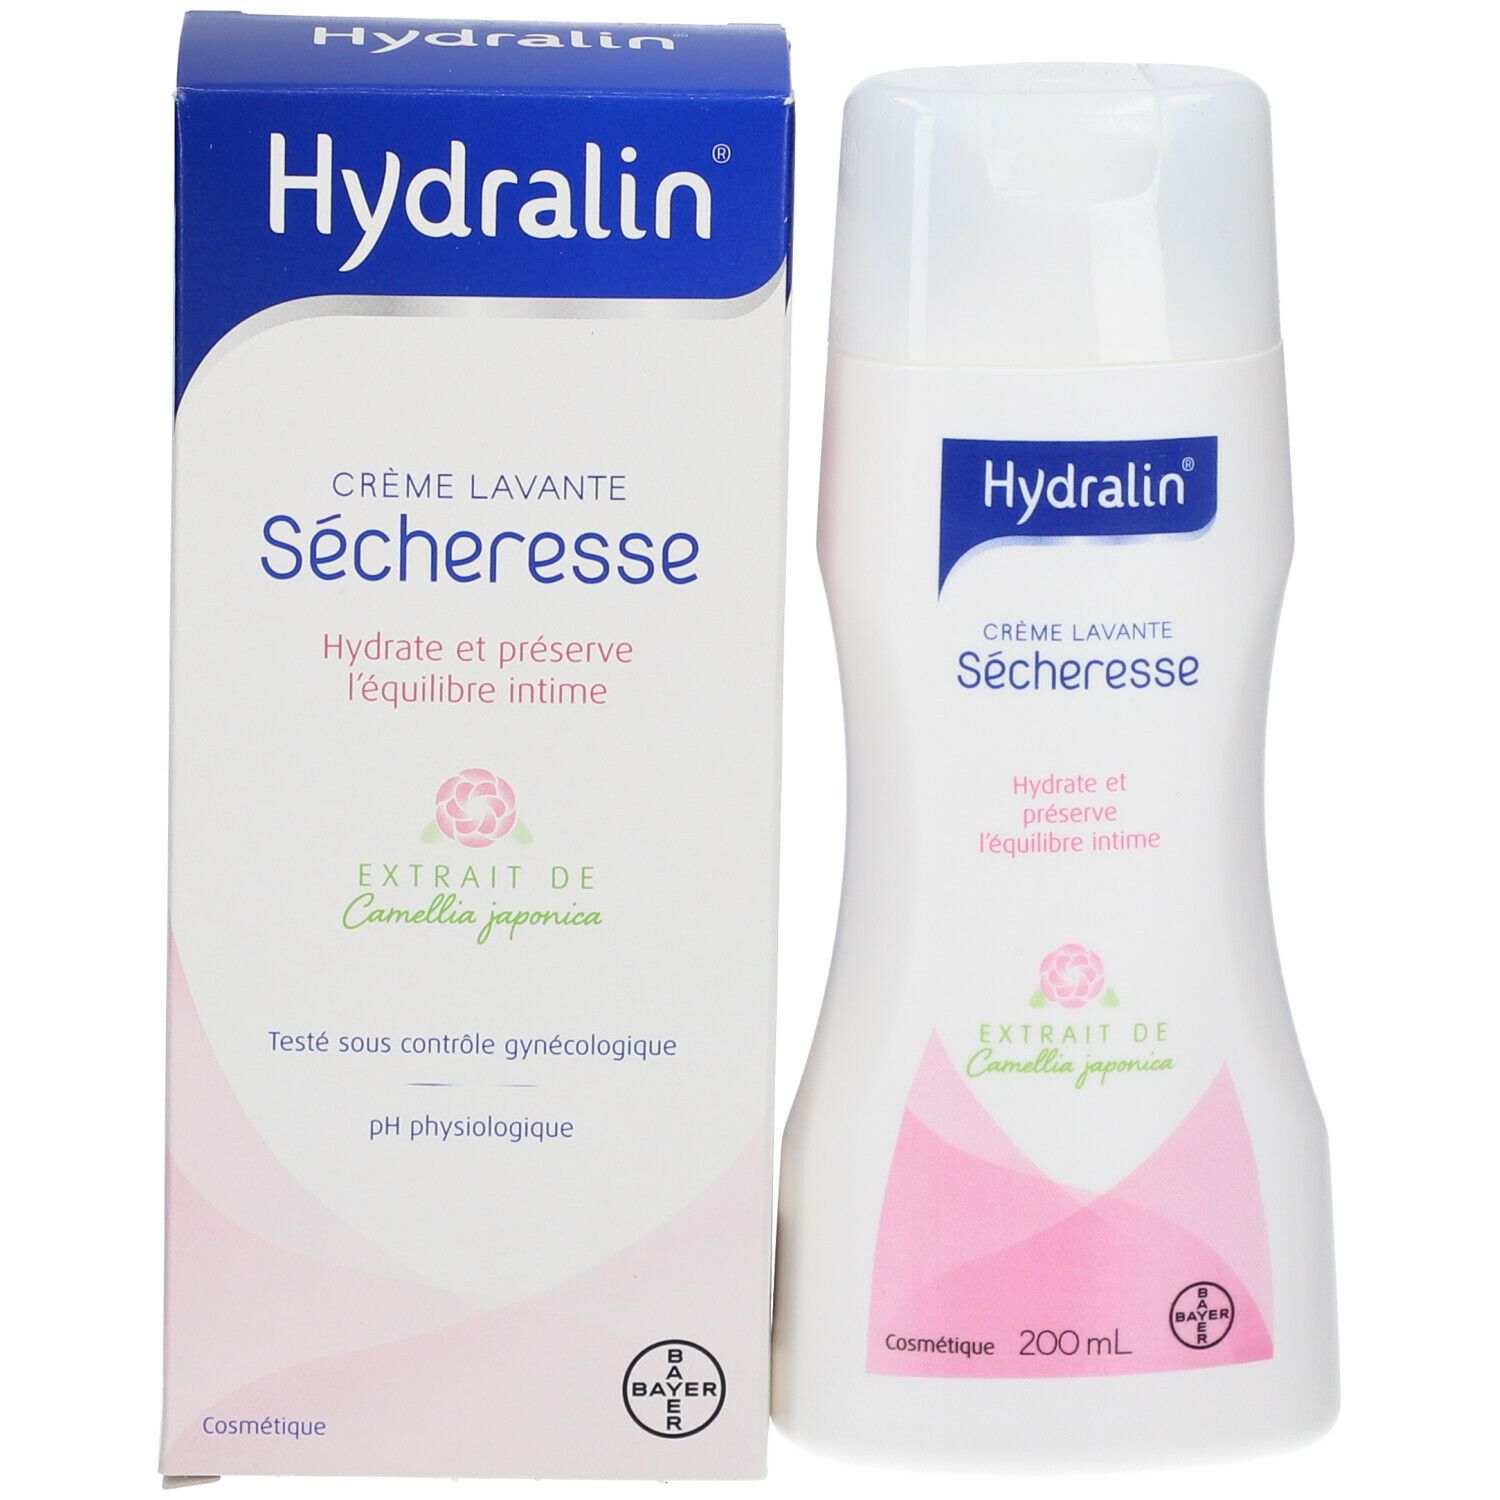 HYDRALIN SECHERESSE Crème Lavante 200ml - Hydrate et Préverse l